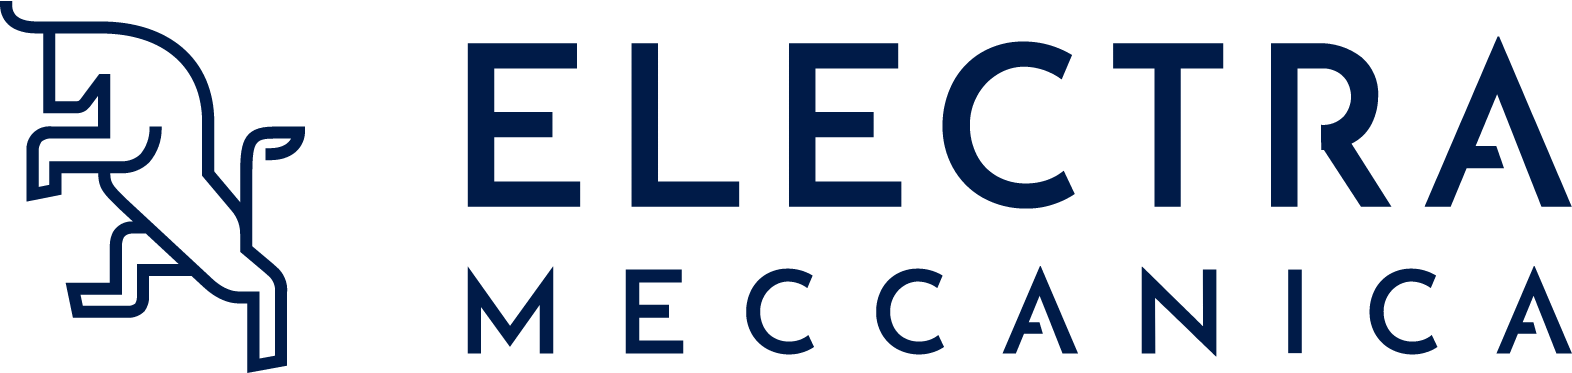 Electra Meccanica logo large (transparent PNG)